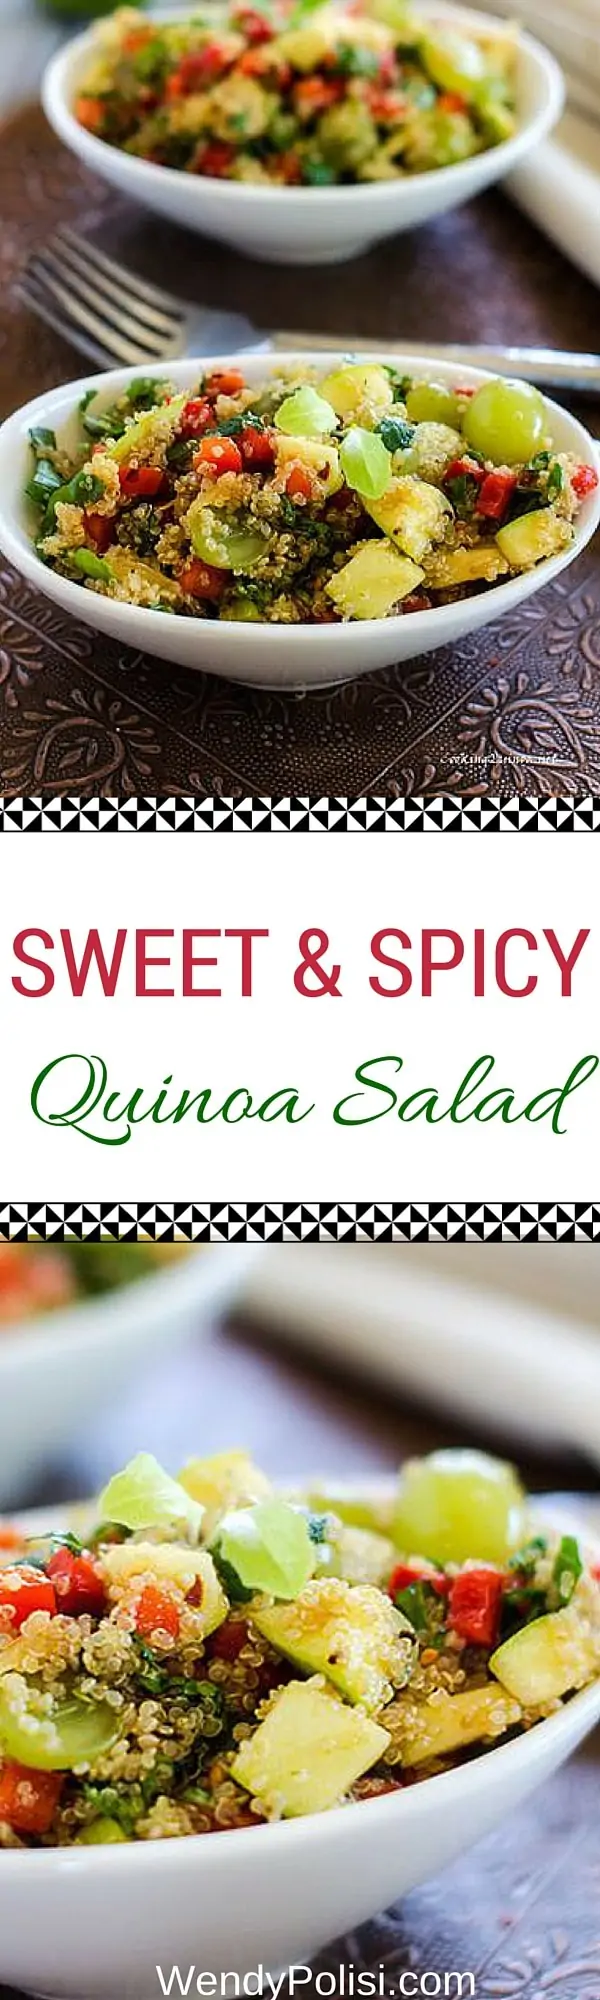 Sweet & Spicy Quinoa Salad